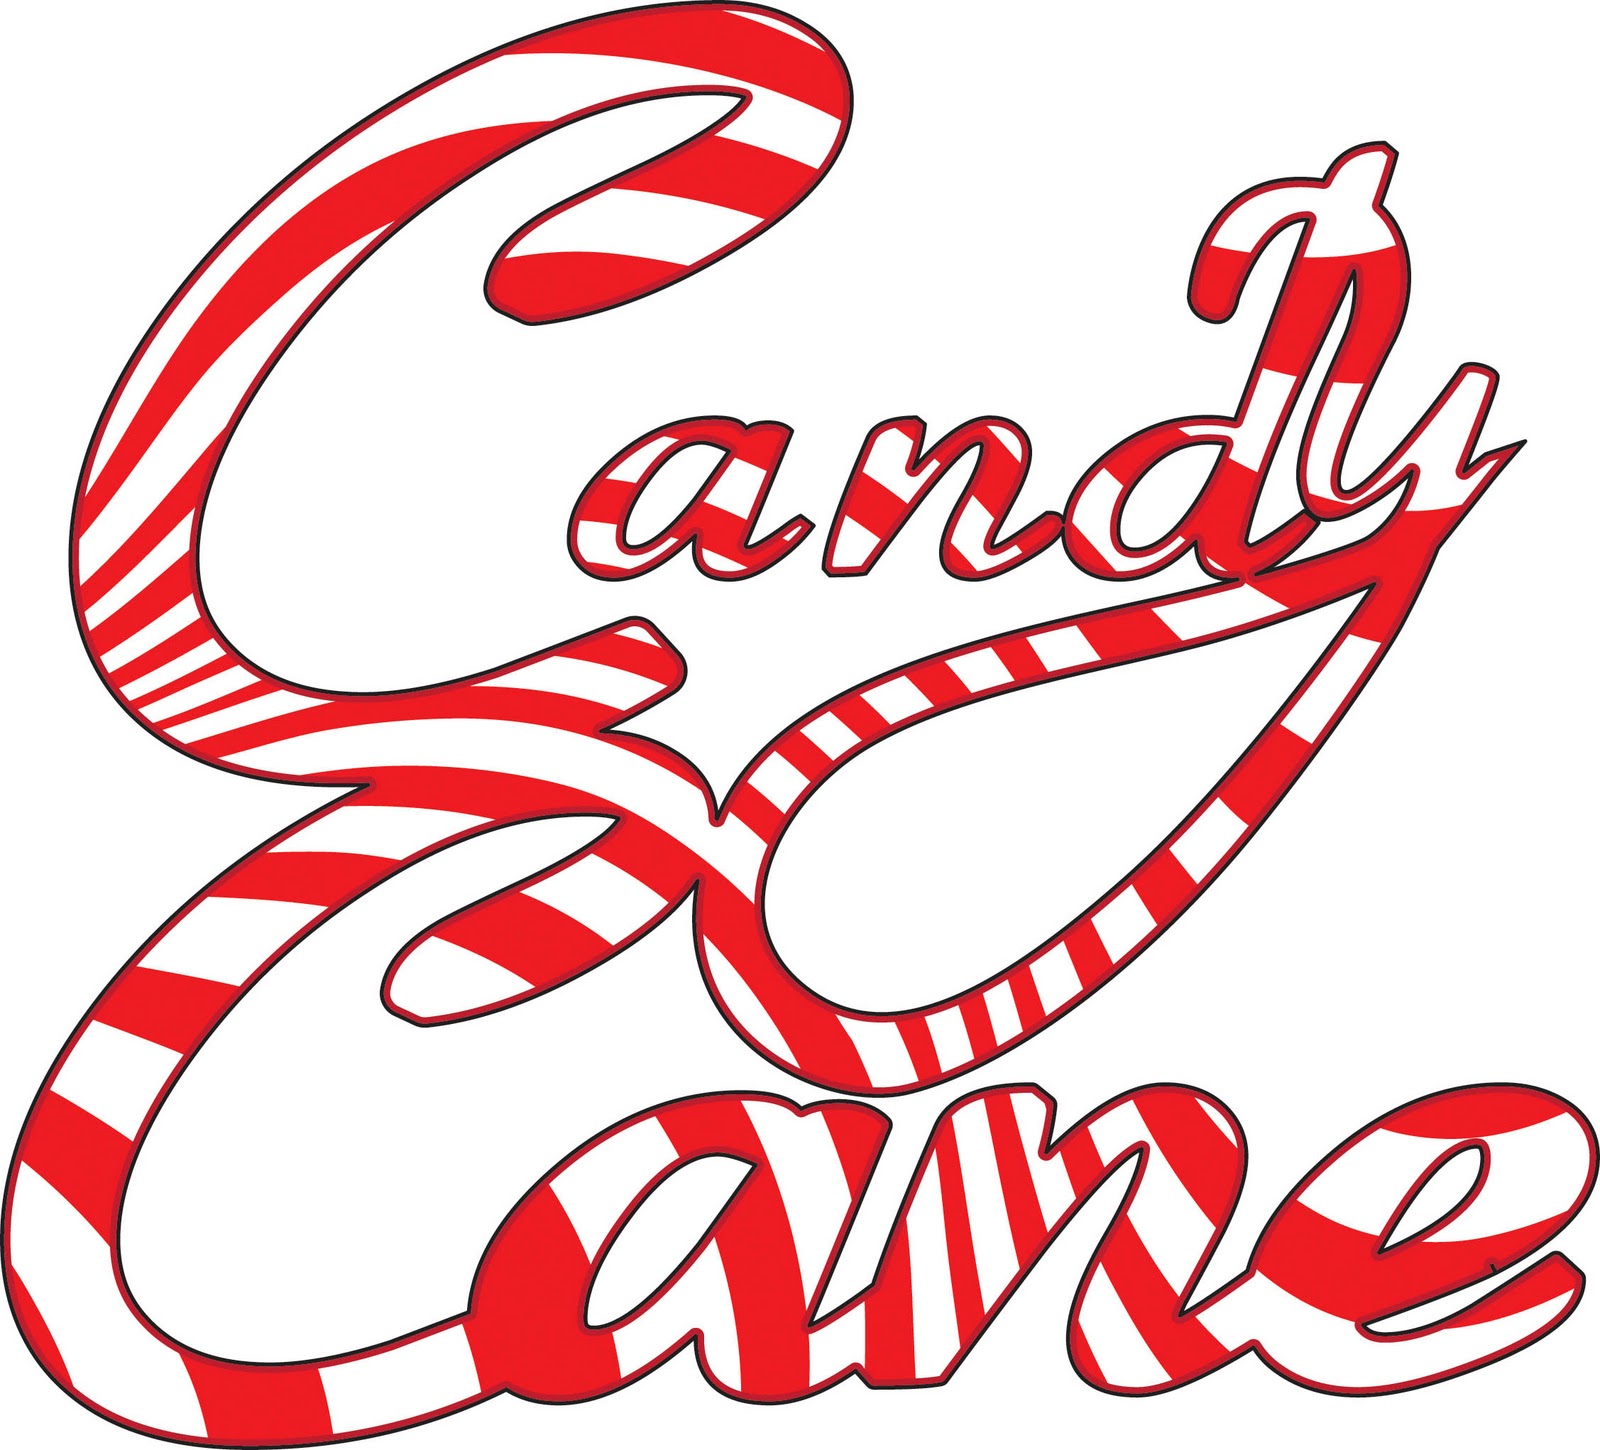 Candy Cane | Candycane Christmas | Pinterest